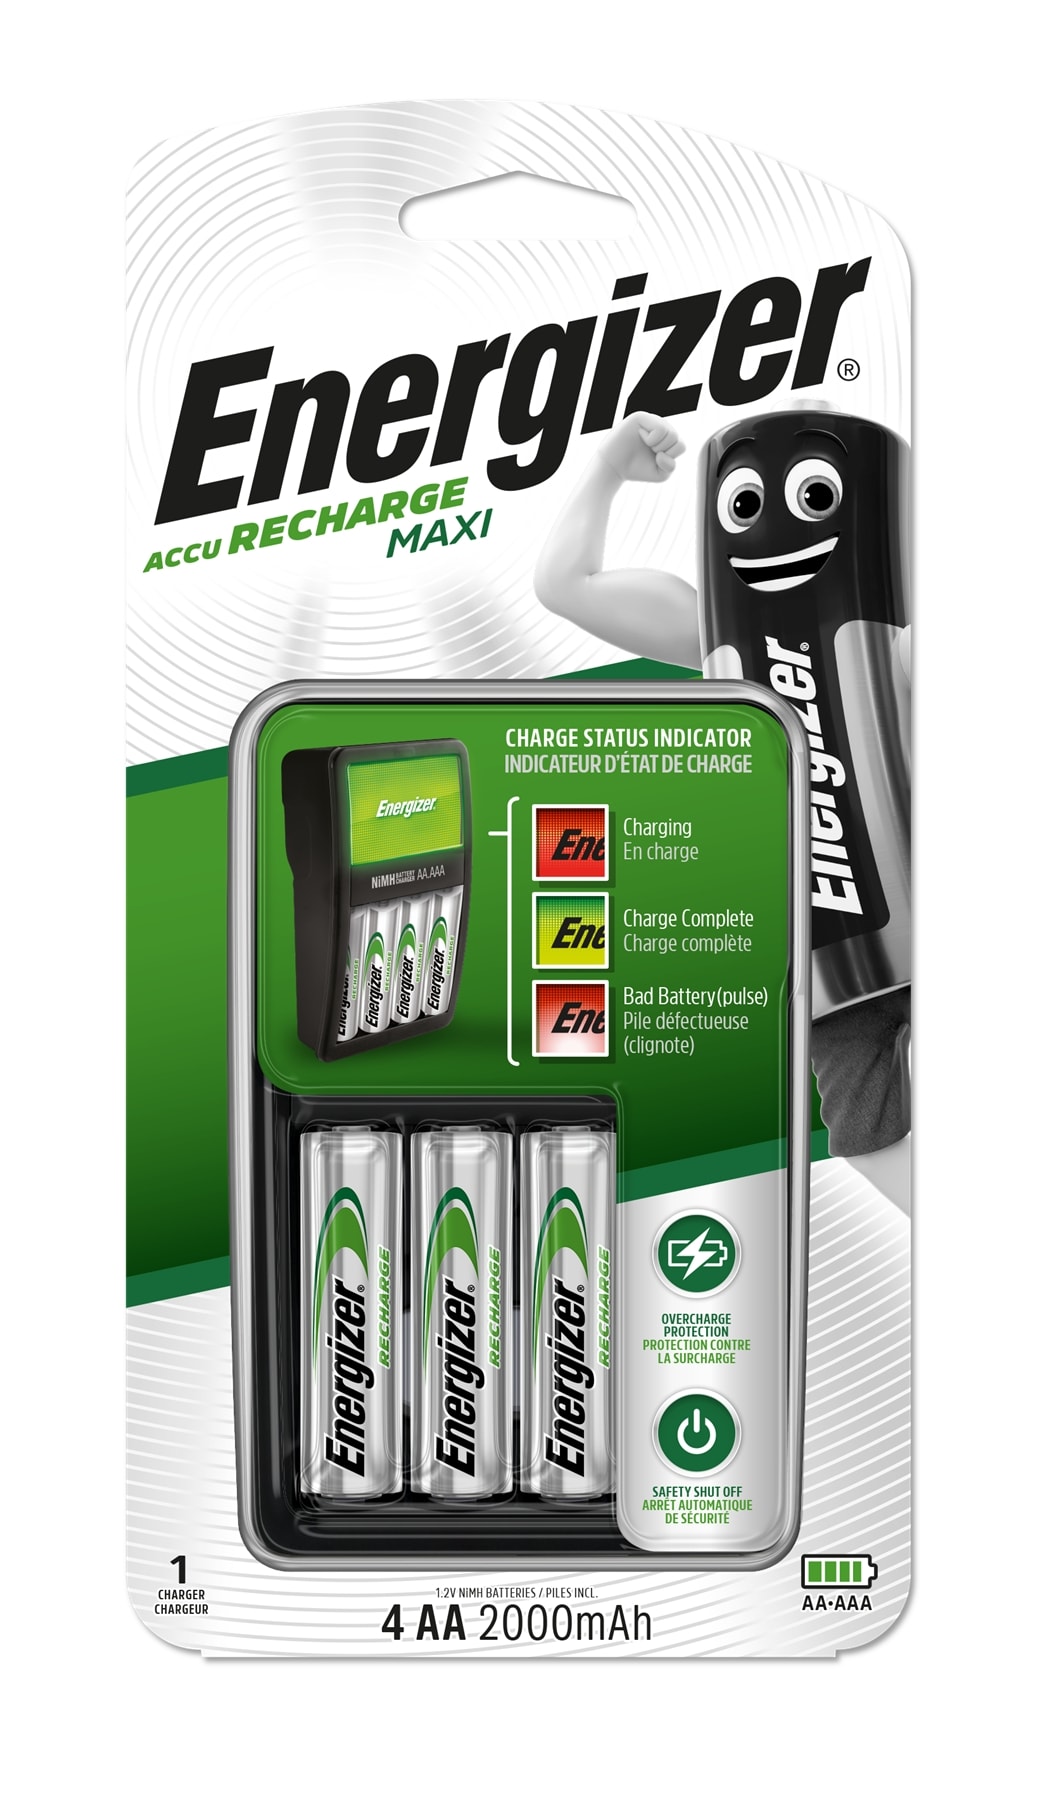 Energizer - Chargeur Maxi 2000 mAh recharge 4 piles AA ou AAA avec indicateur de chargement